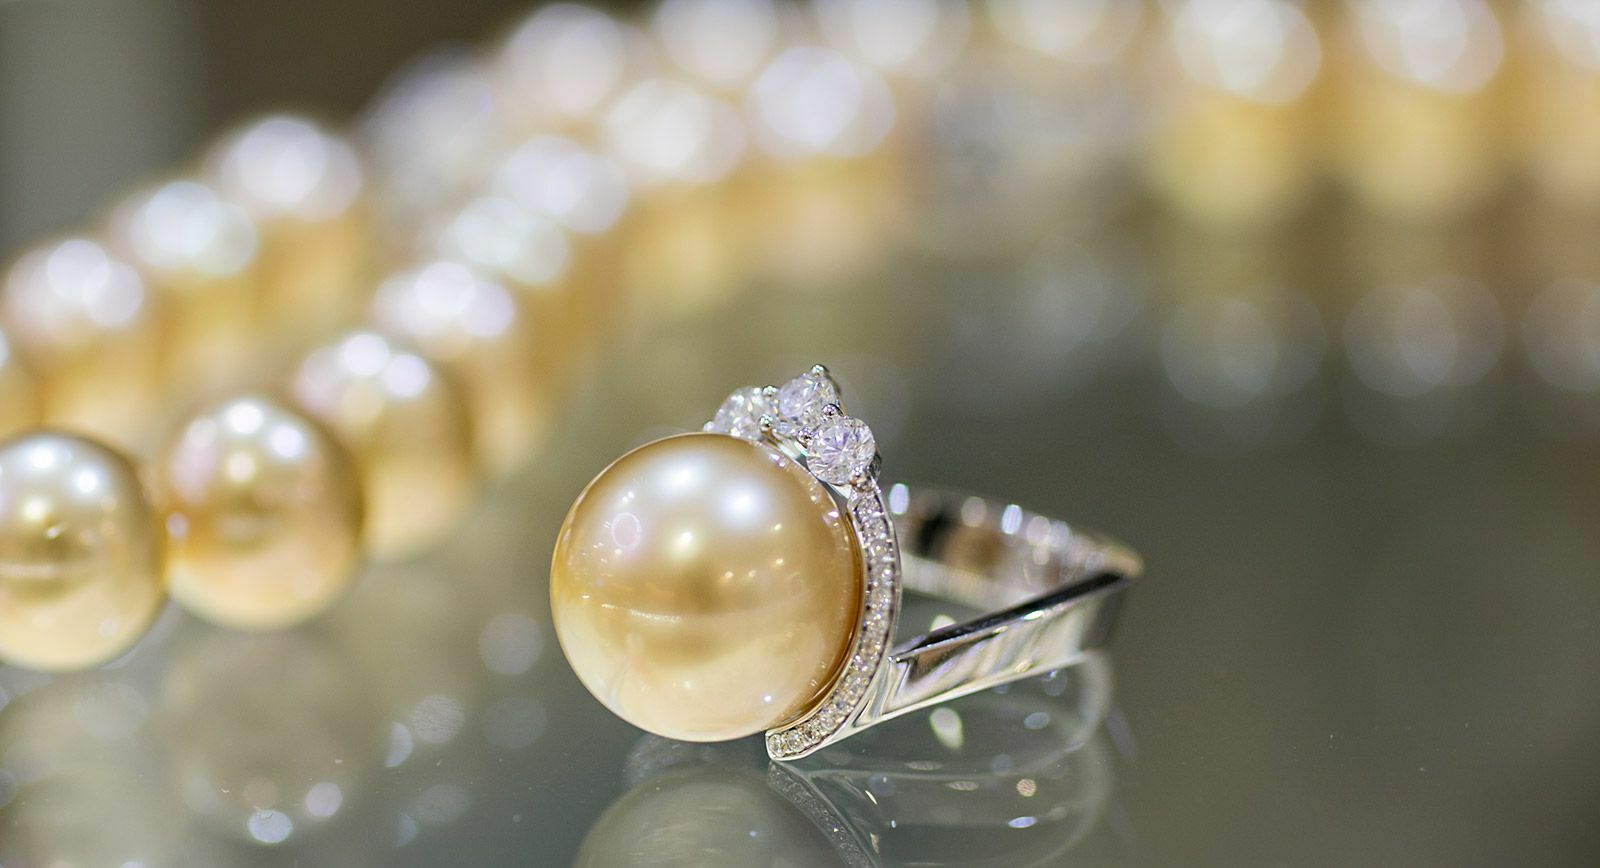 Ksenia Podnebesnaya: expert advice on buying pearl jewellery